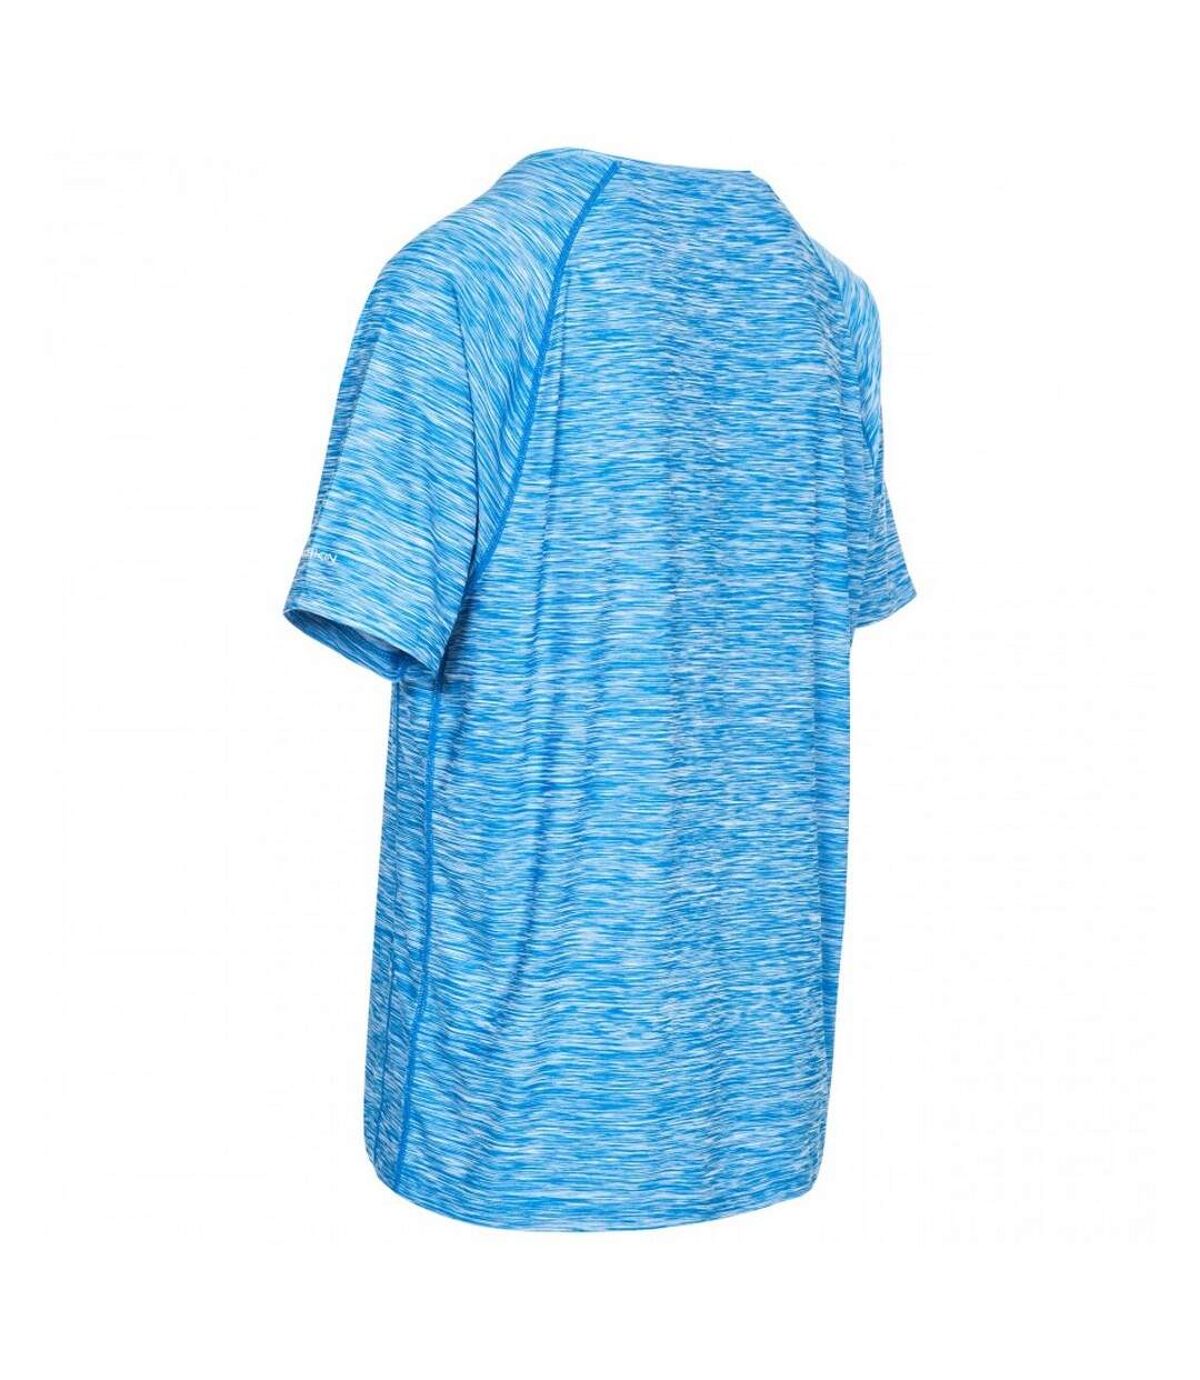 Trespass Mens Gaffney Active T-Shirt (Bright Blue Marl) - UTTP4069